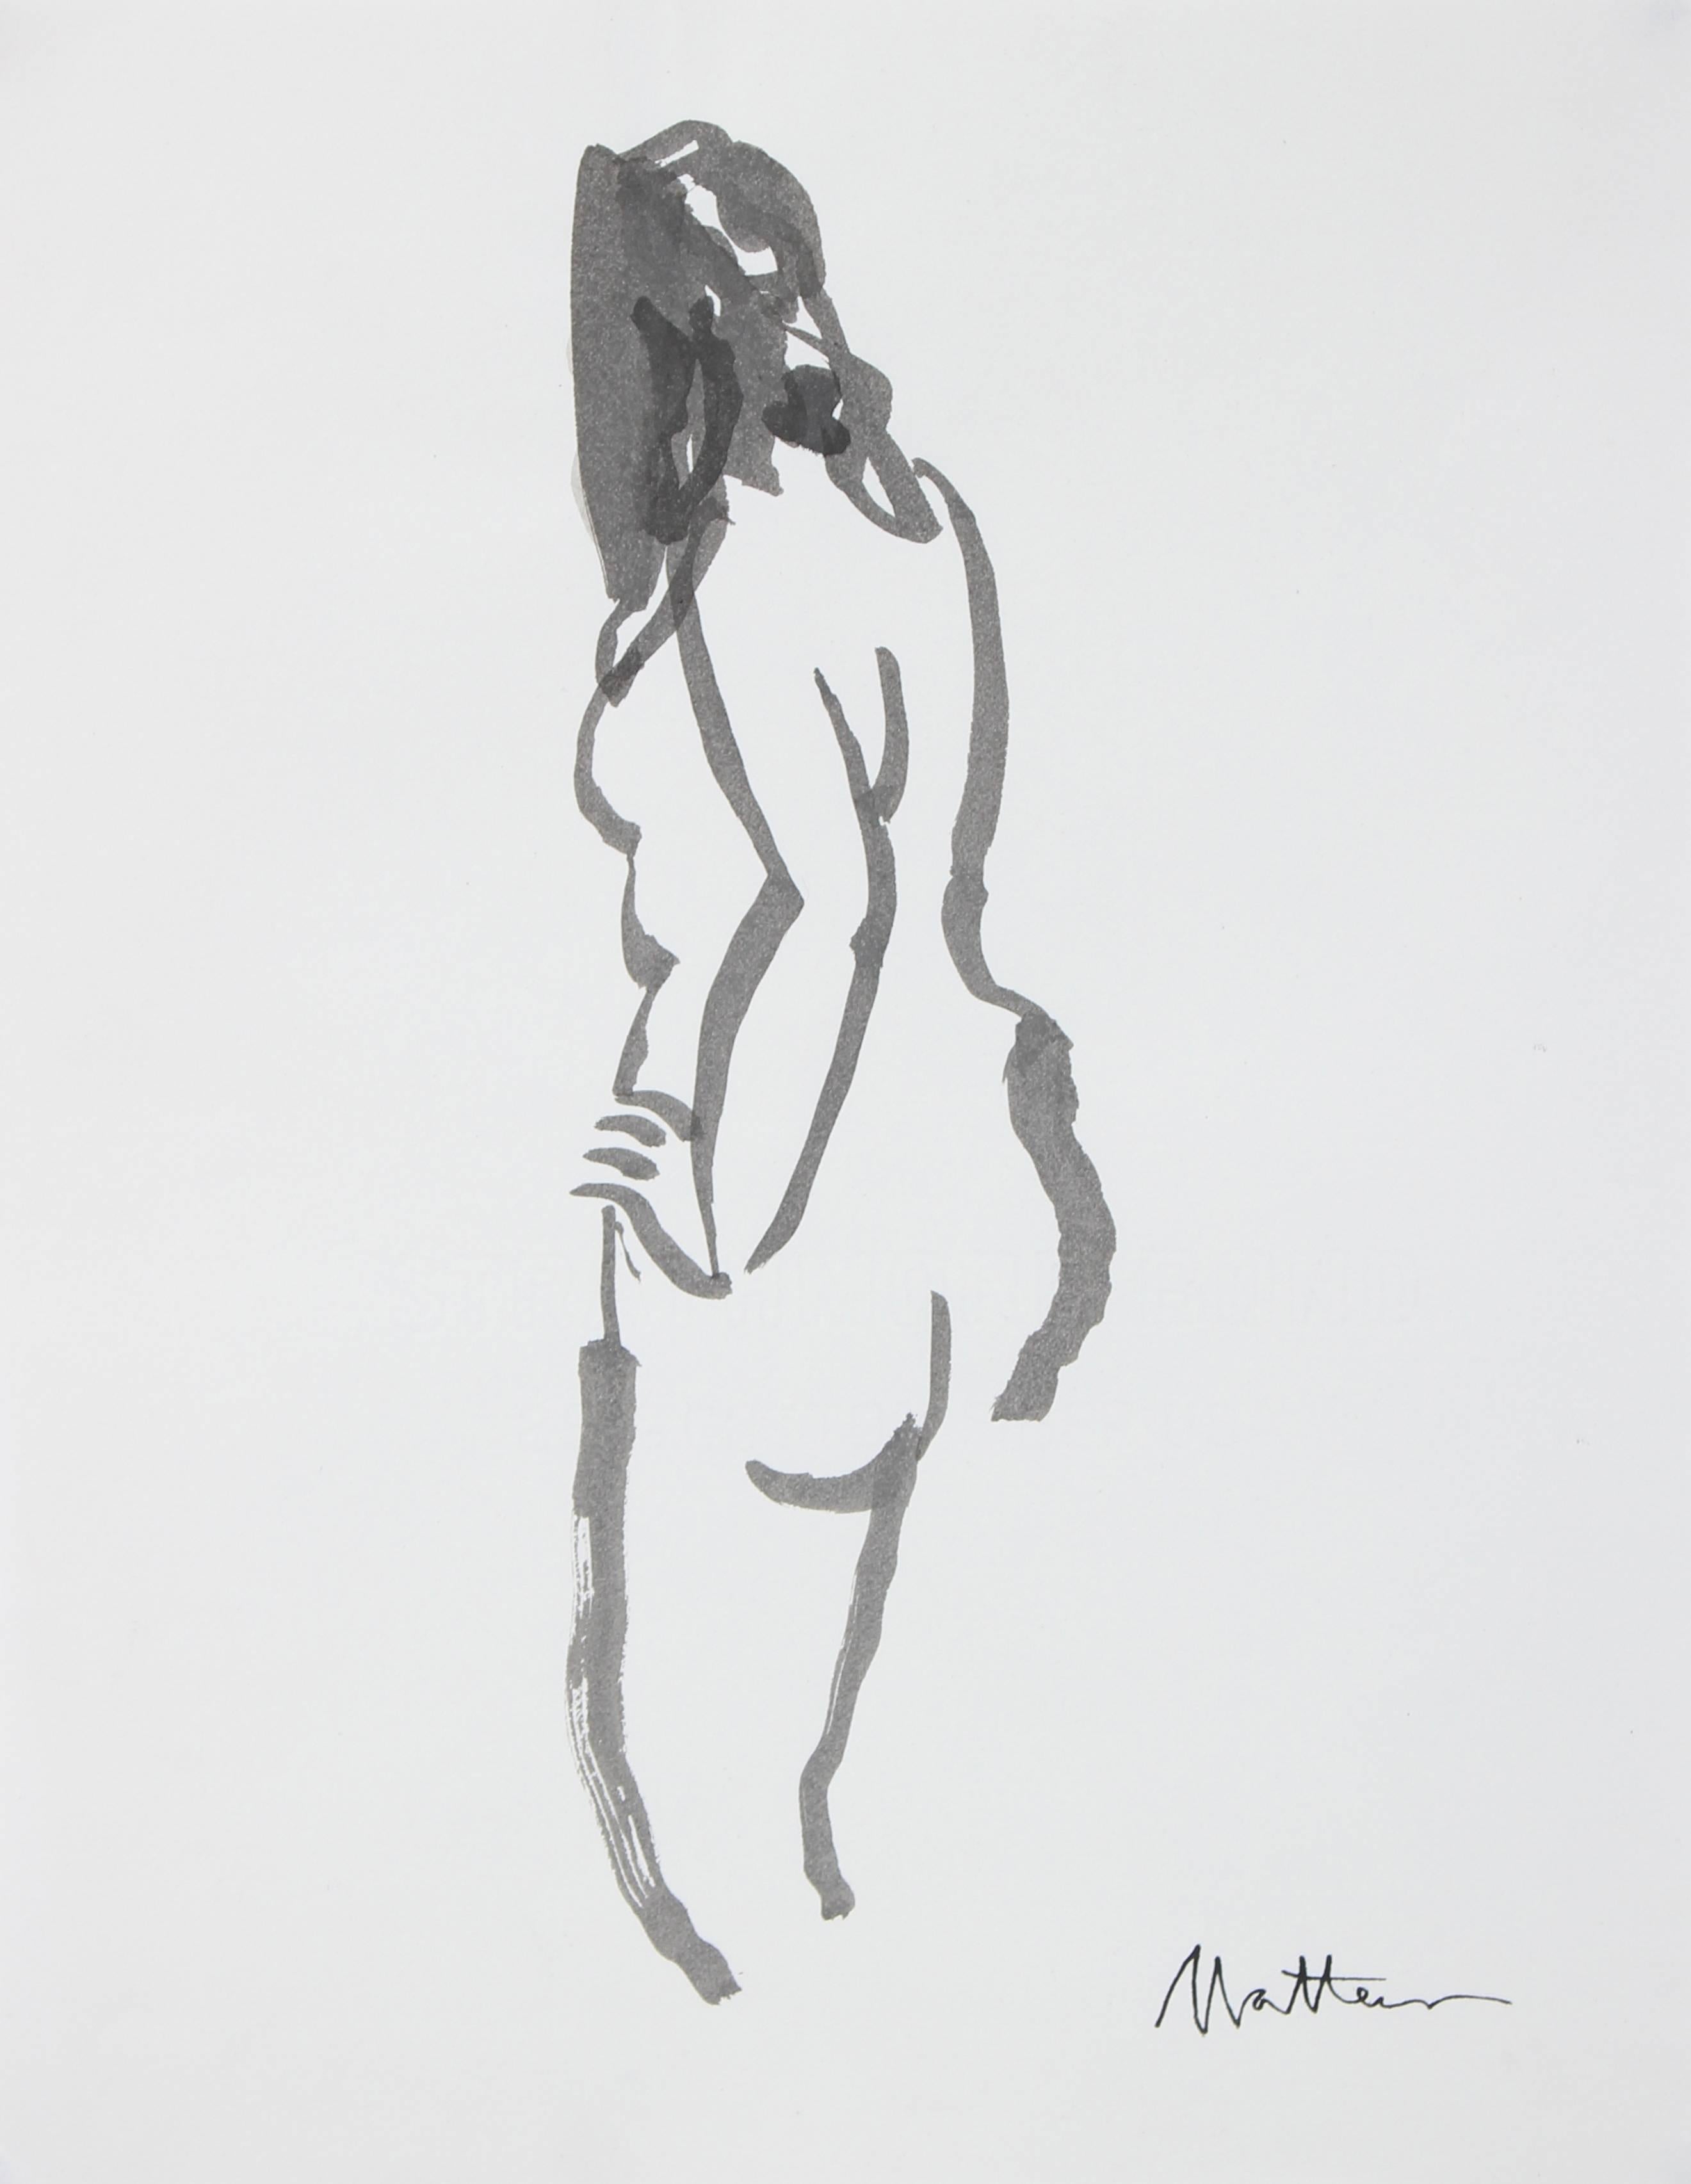 Rip Matteson Nude - Minimal Figure in Ink